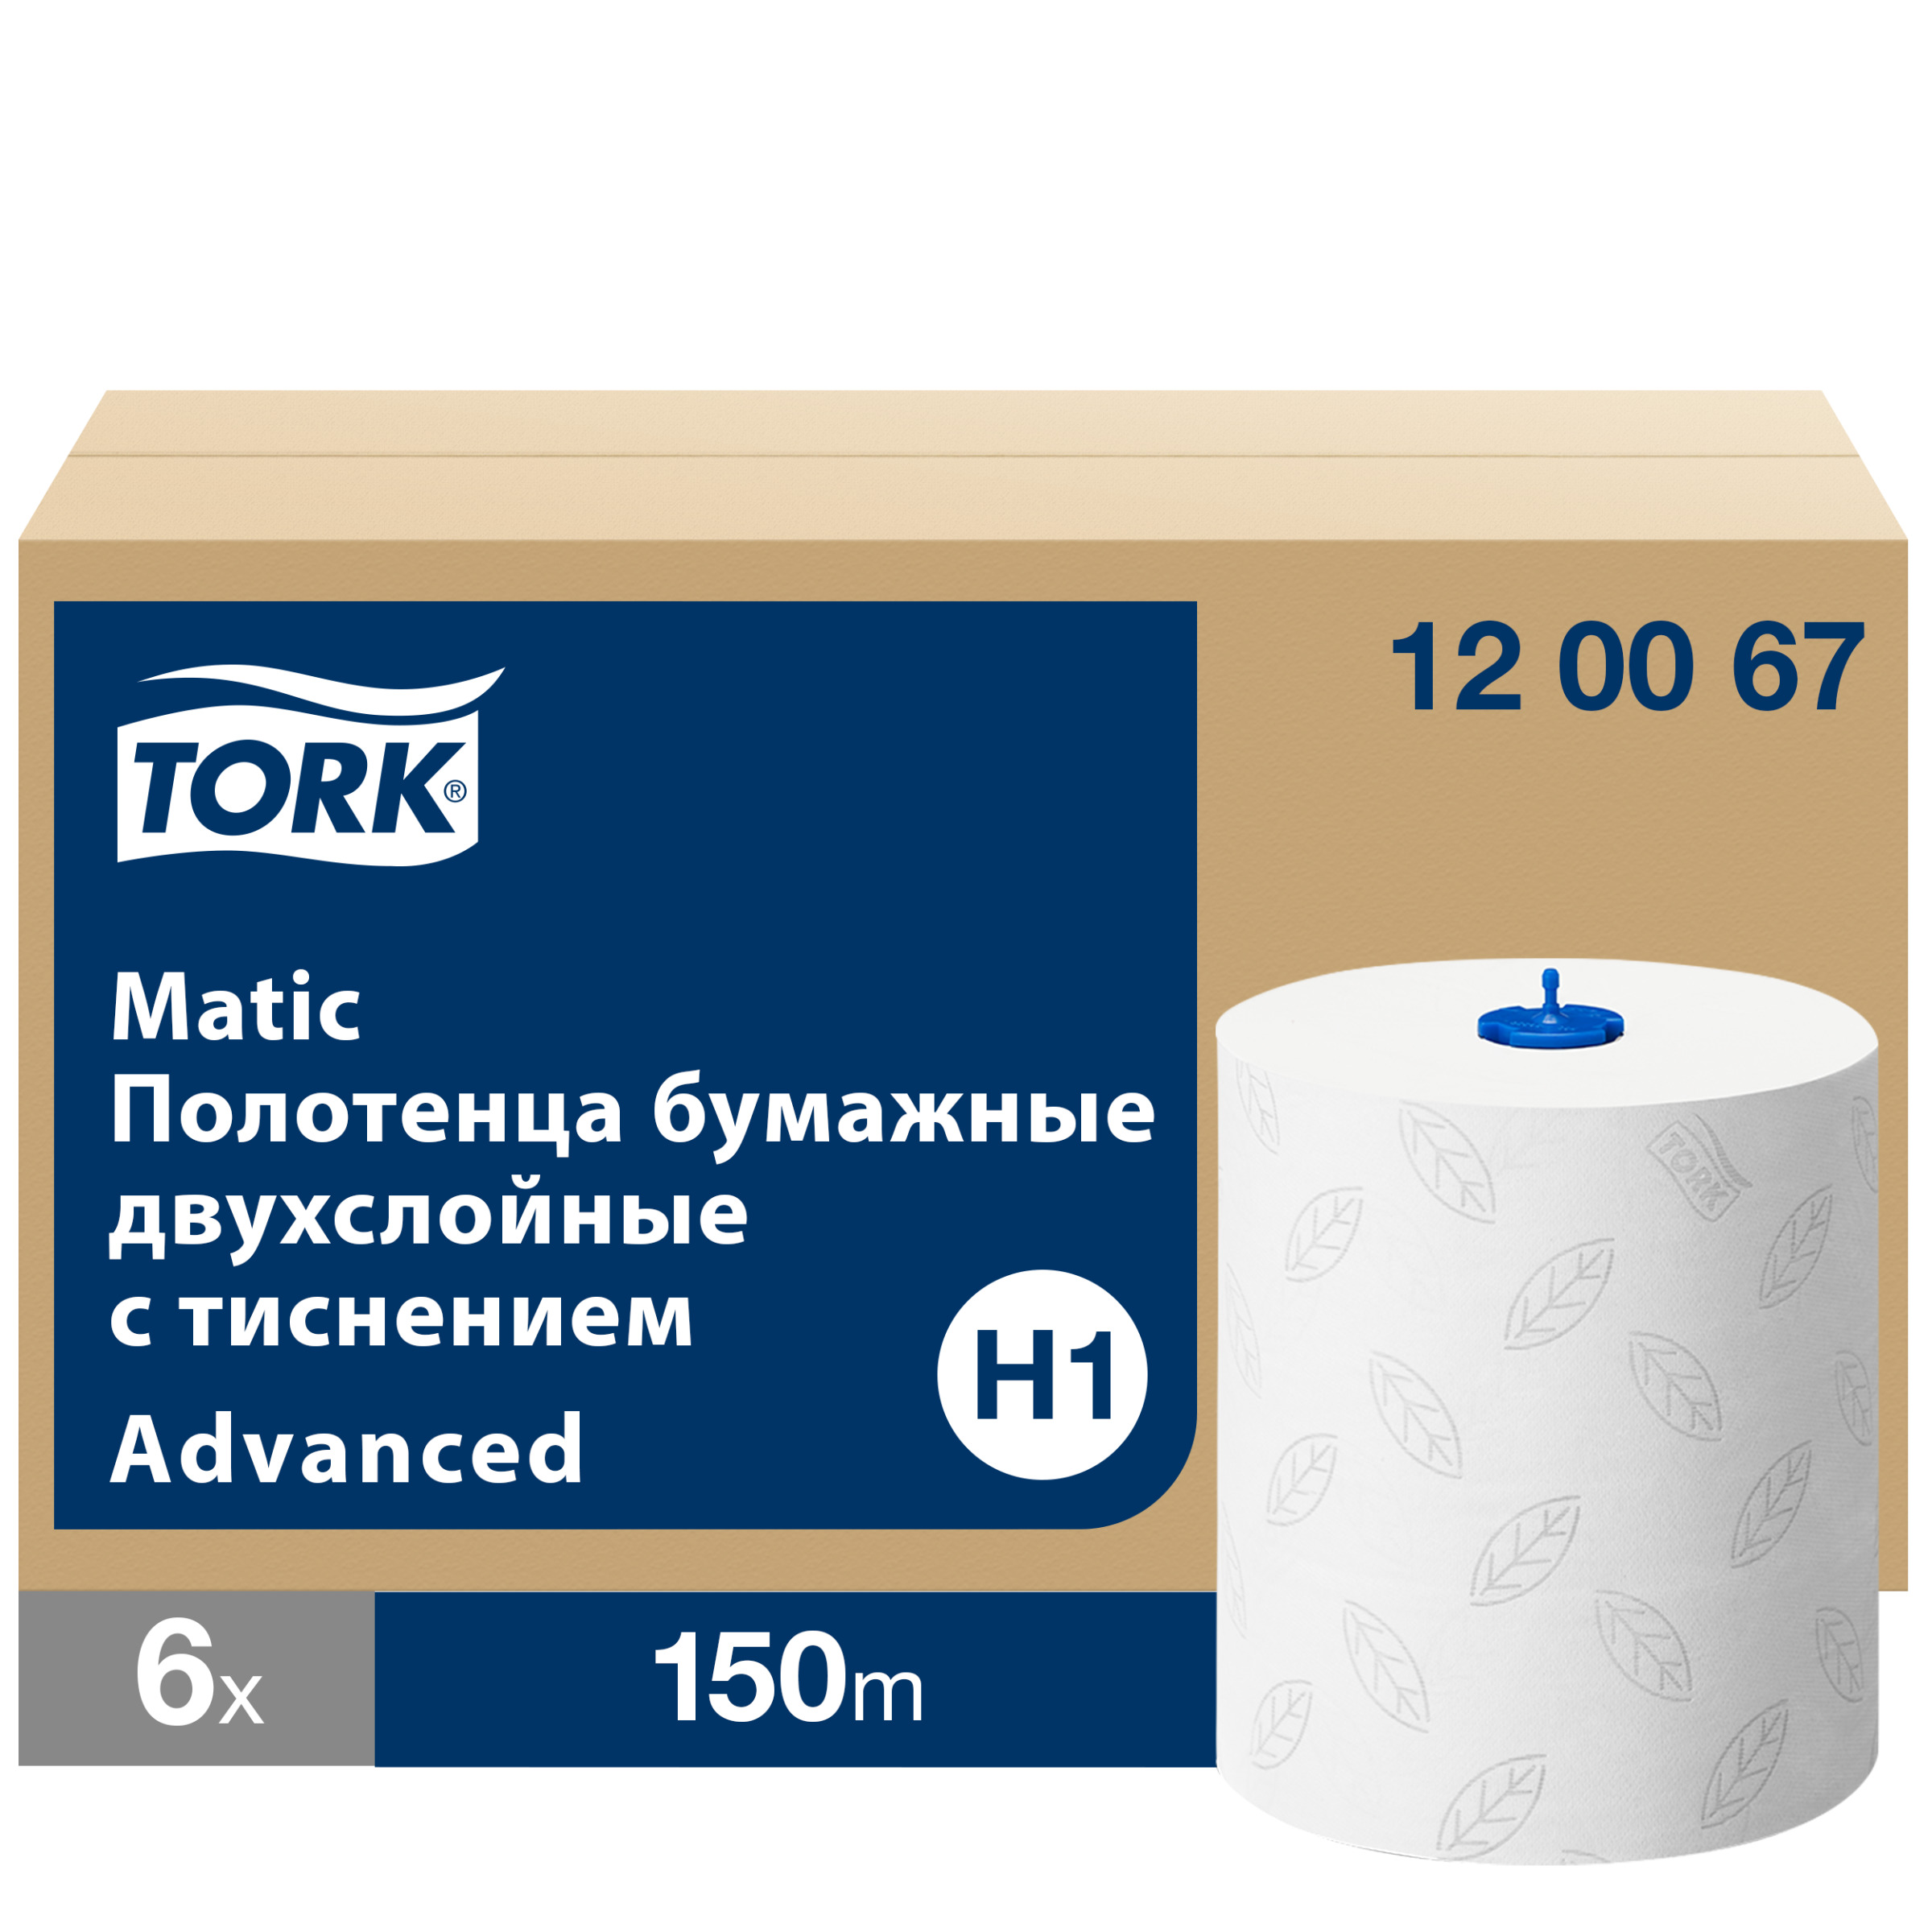 Полотенце бумажное tork advanced. 120067 Tork matic Advanced. Полотенца бумажные Tork matic Advanced 120067. Полотенца бумажные Tork h1. 120067 Tork matic полотенца в рулонах.